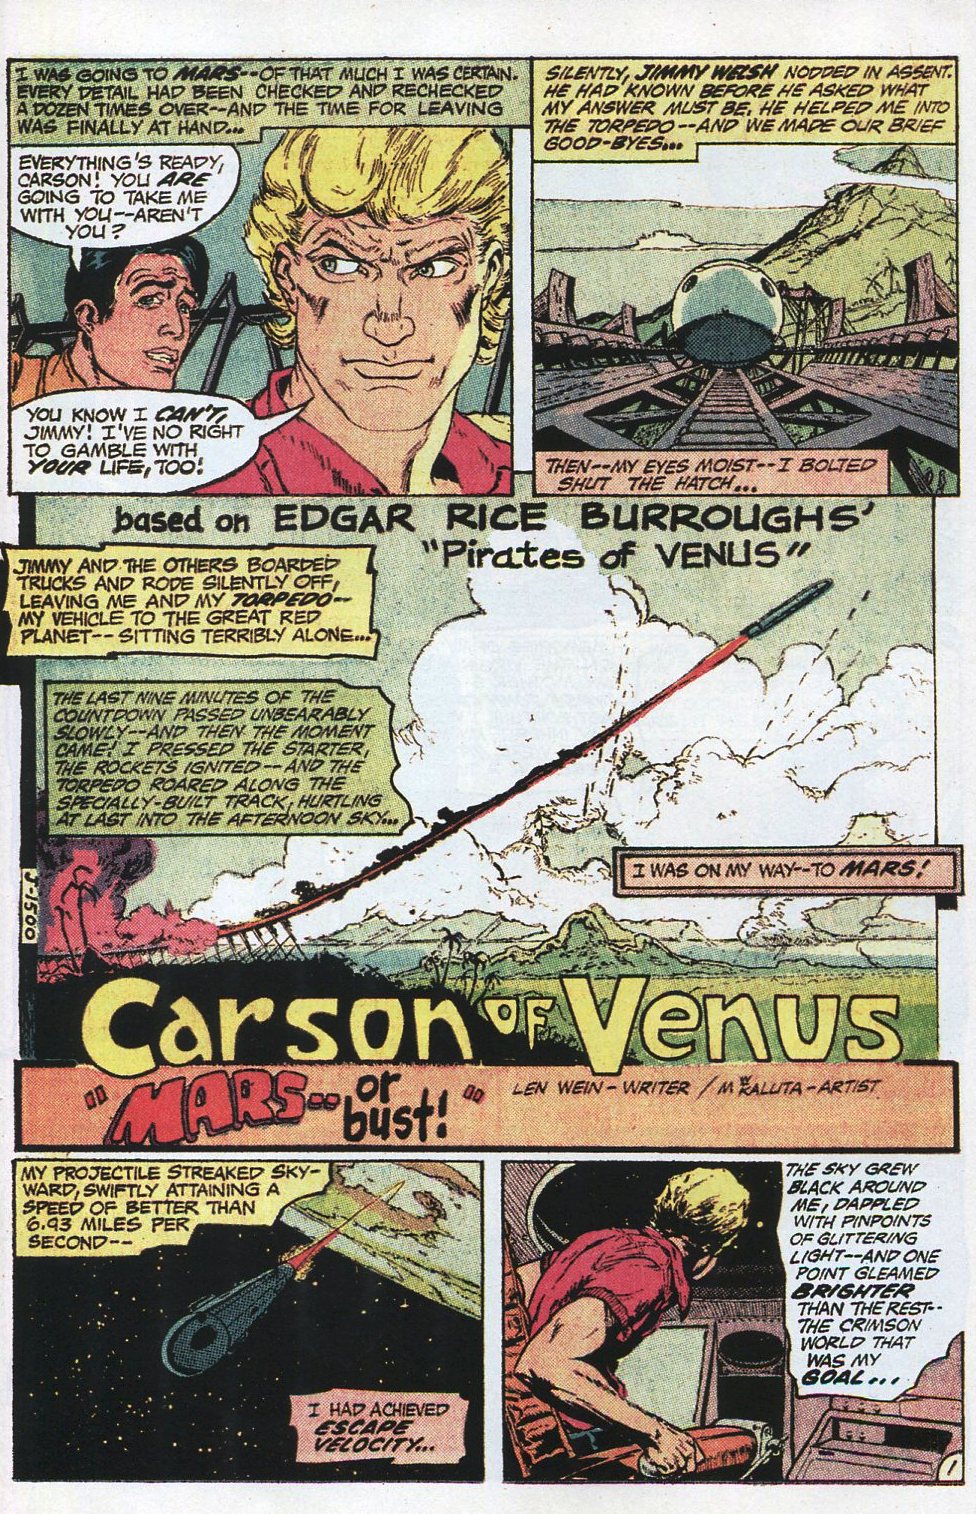 Carson of Venus: Pirates of Venus (2018-): Chapter 1 - Page 3